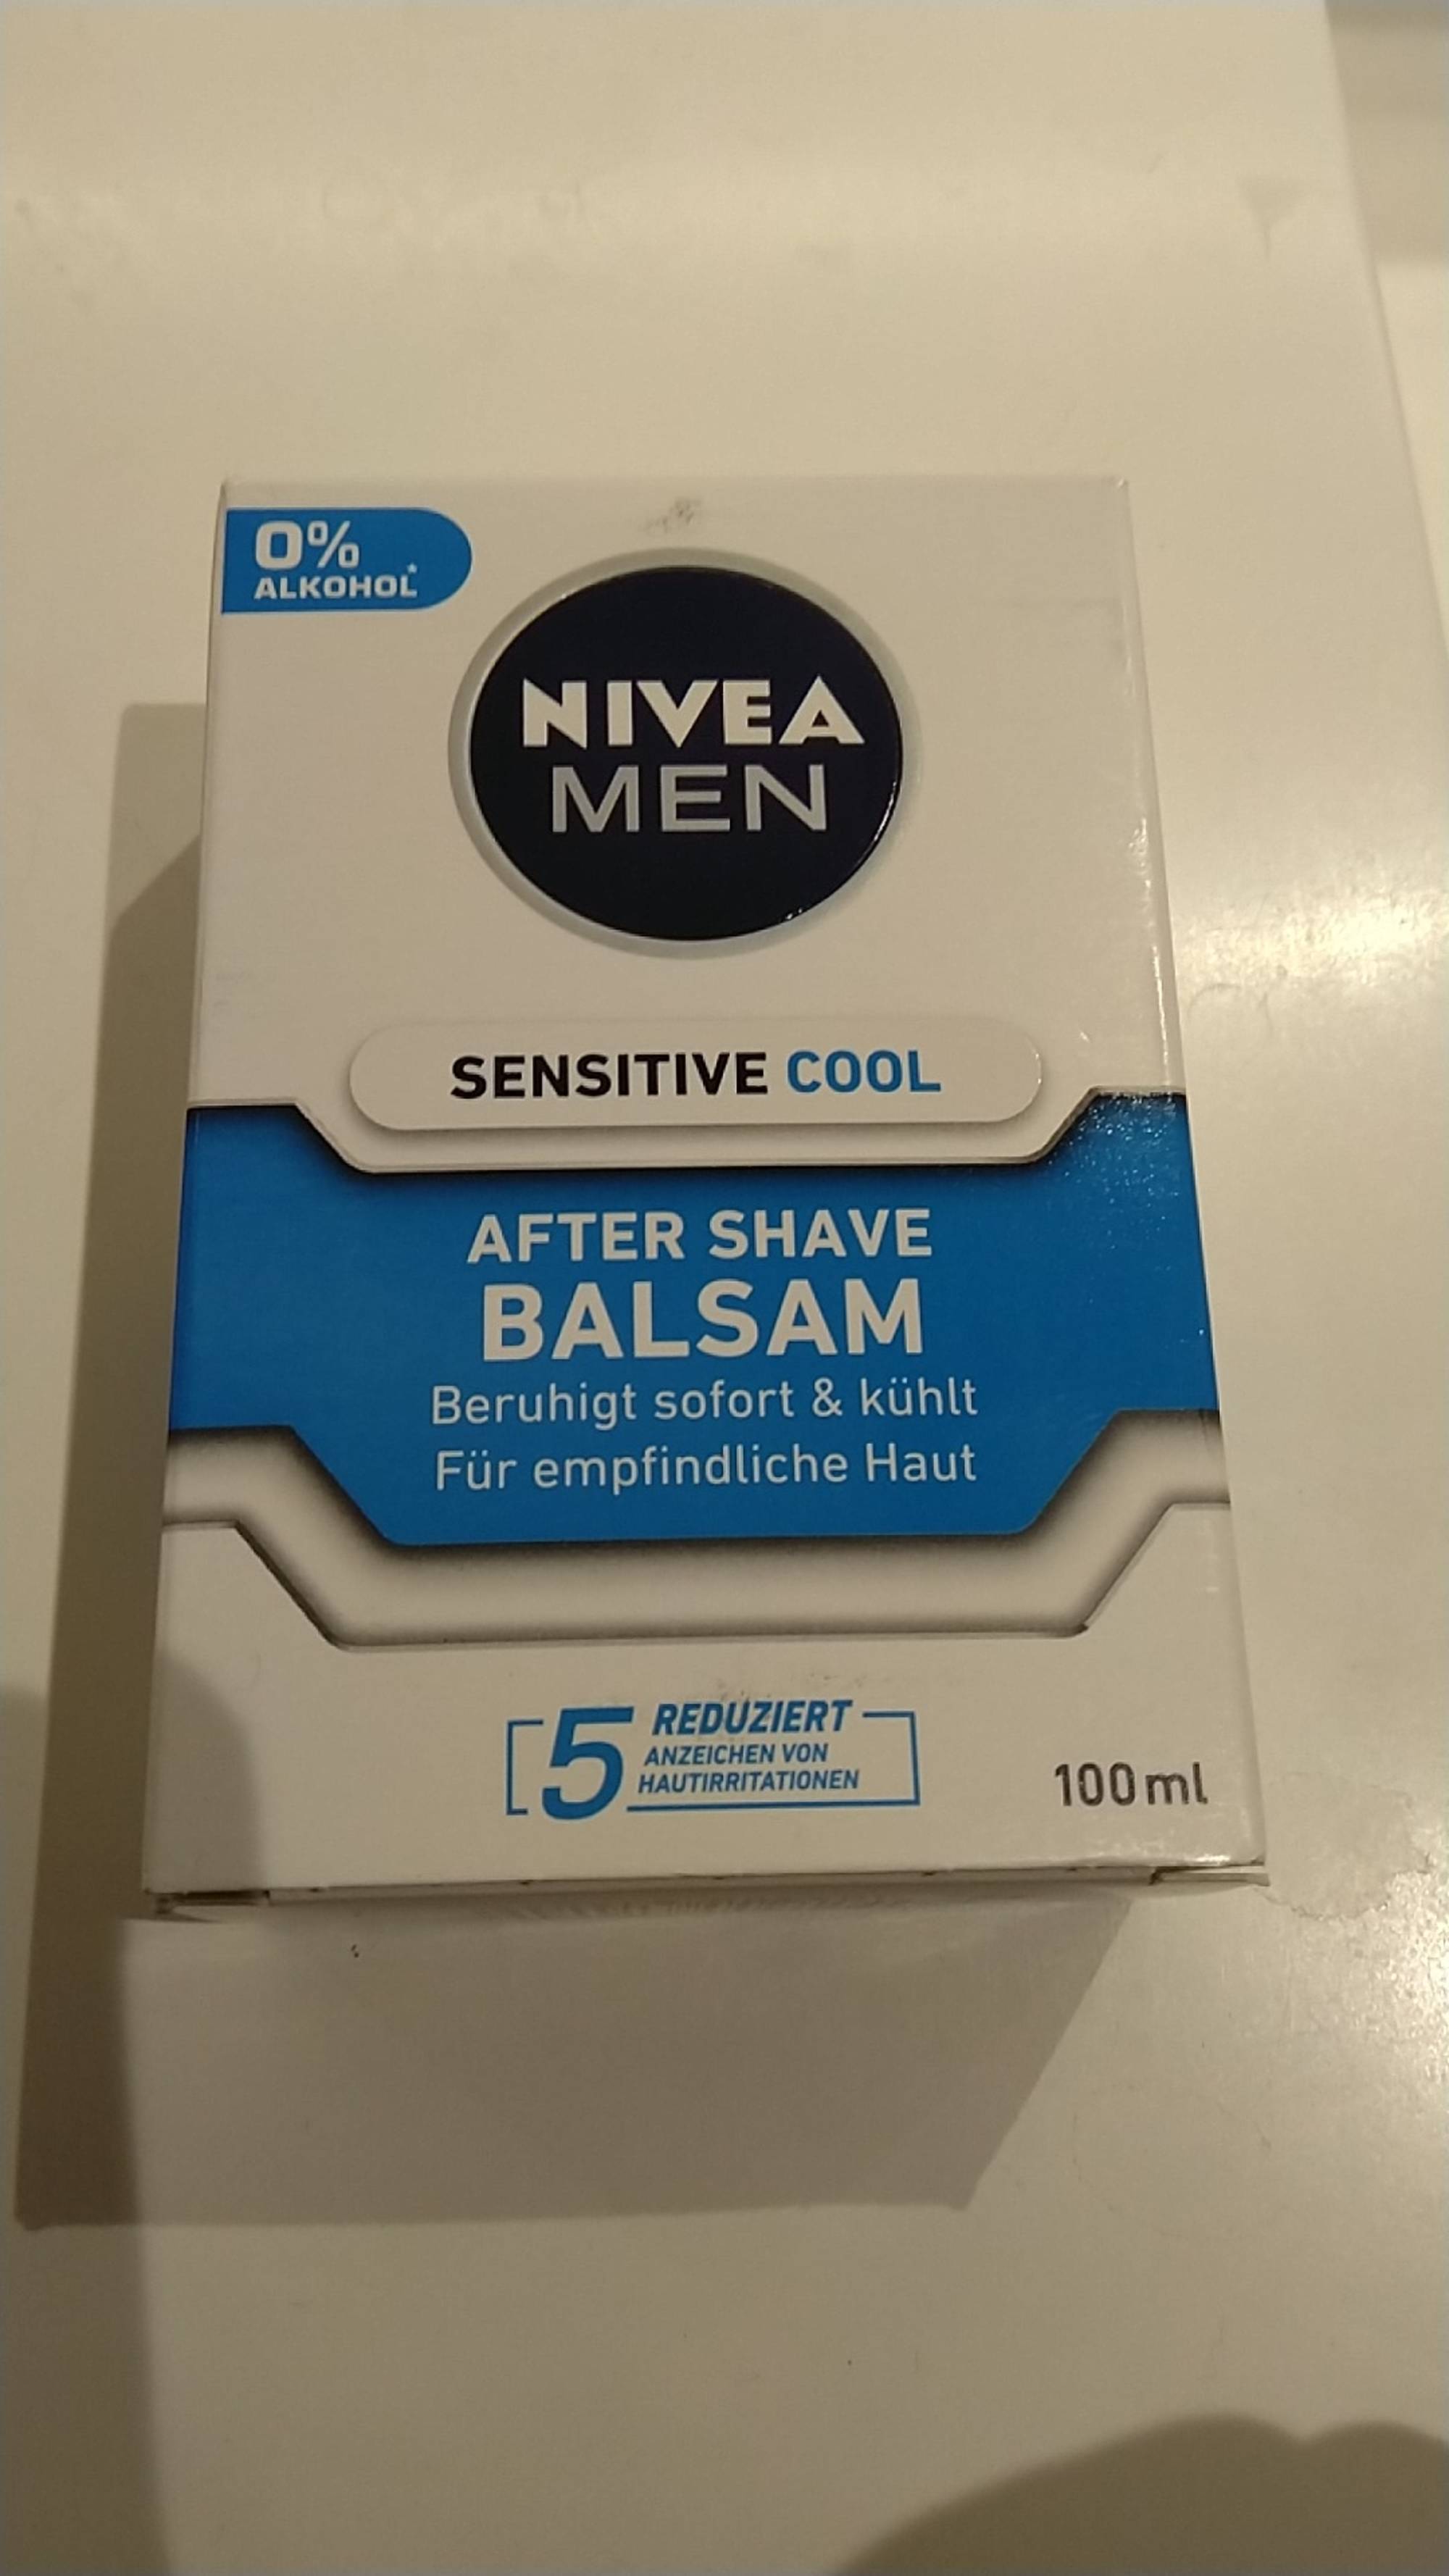 NIVEA MEN - Sensitive cool - After shave balsam